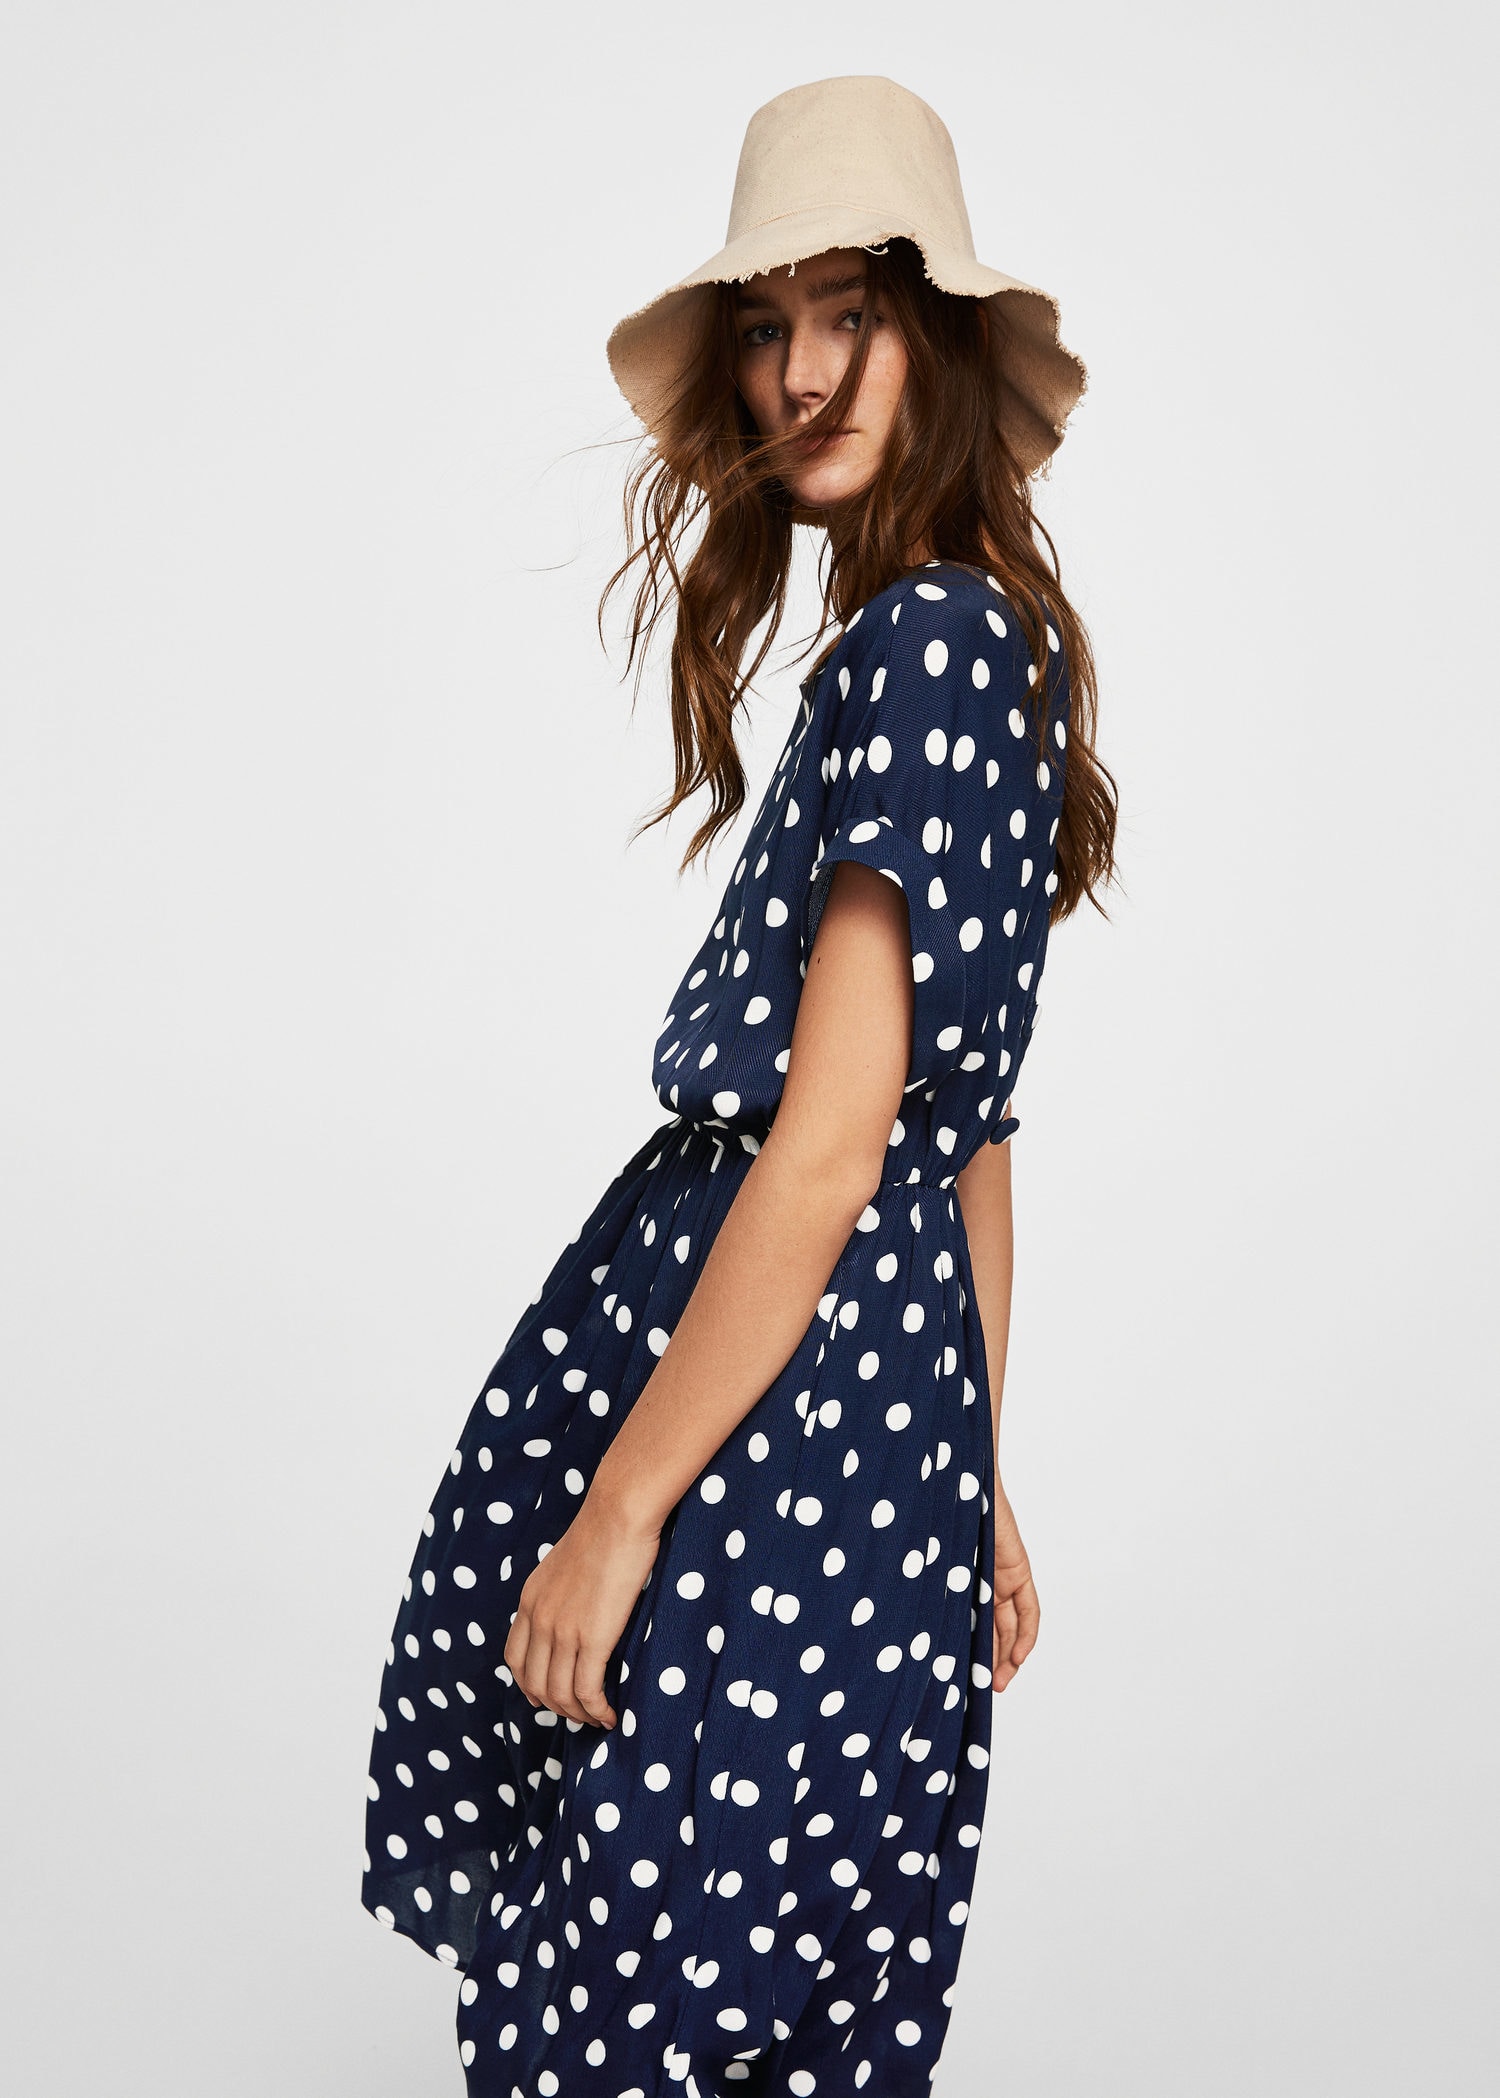 navy blue polka dot midi dress